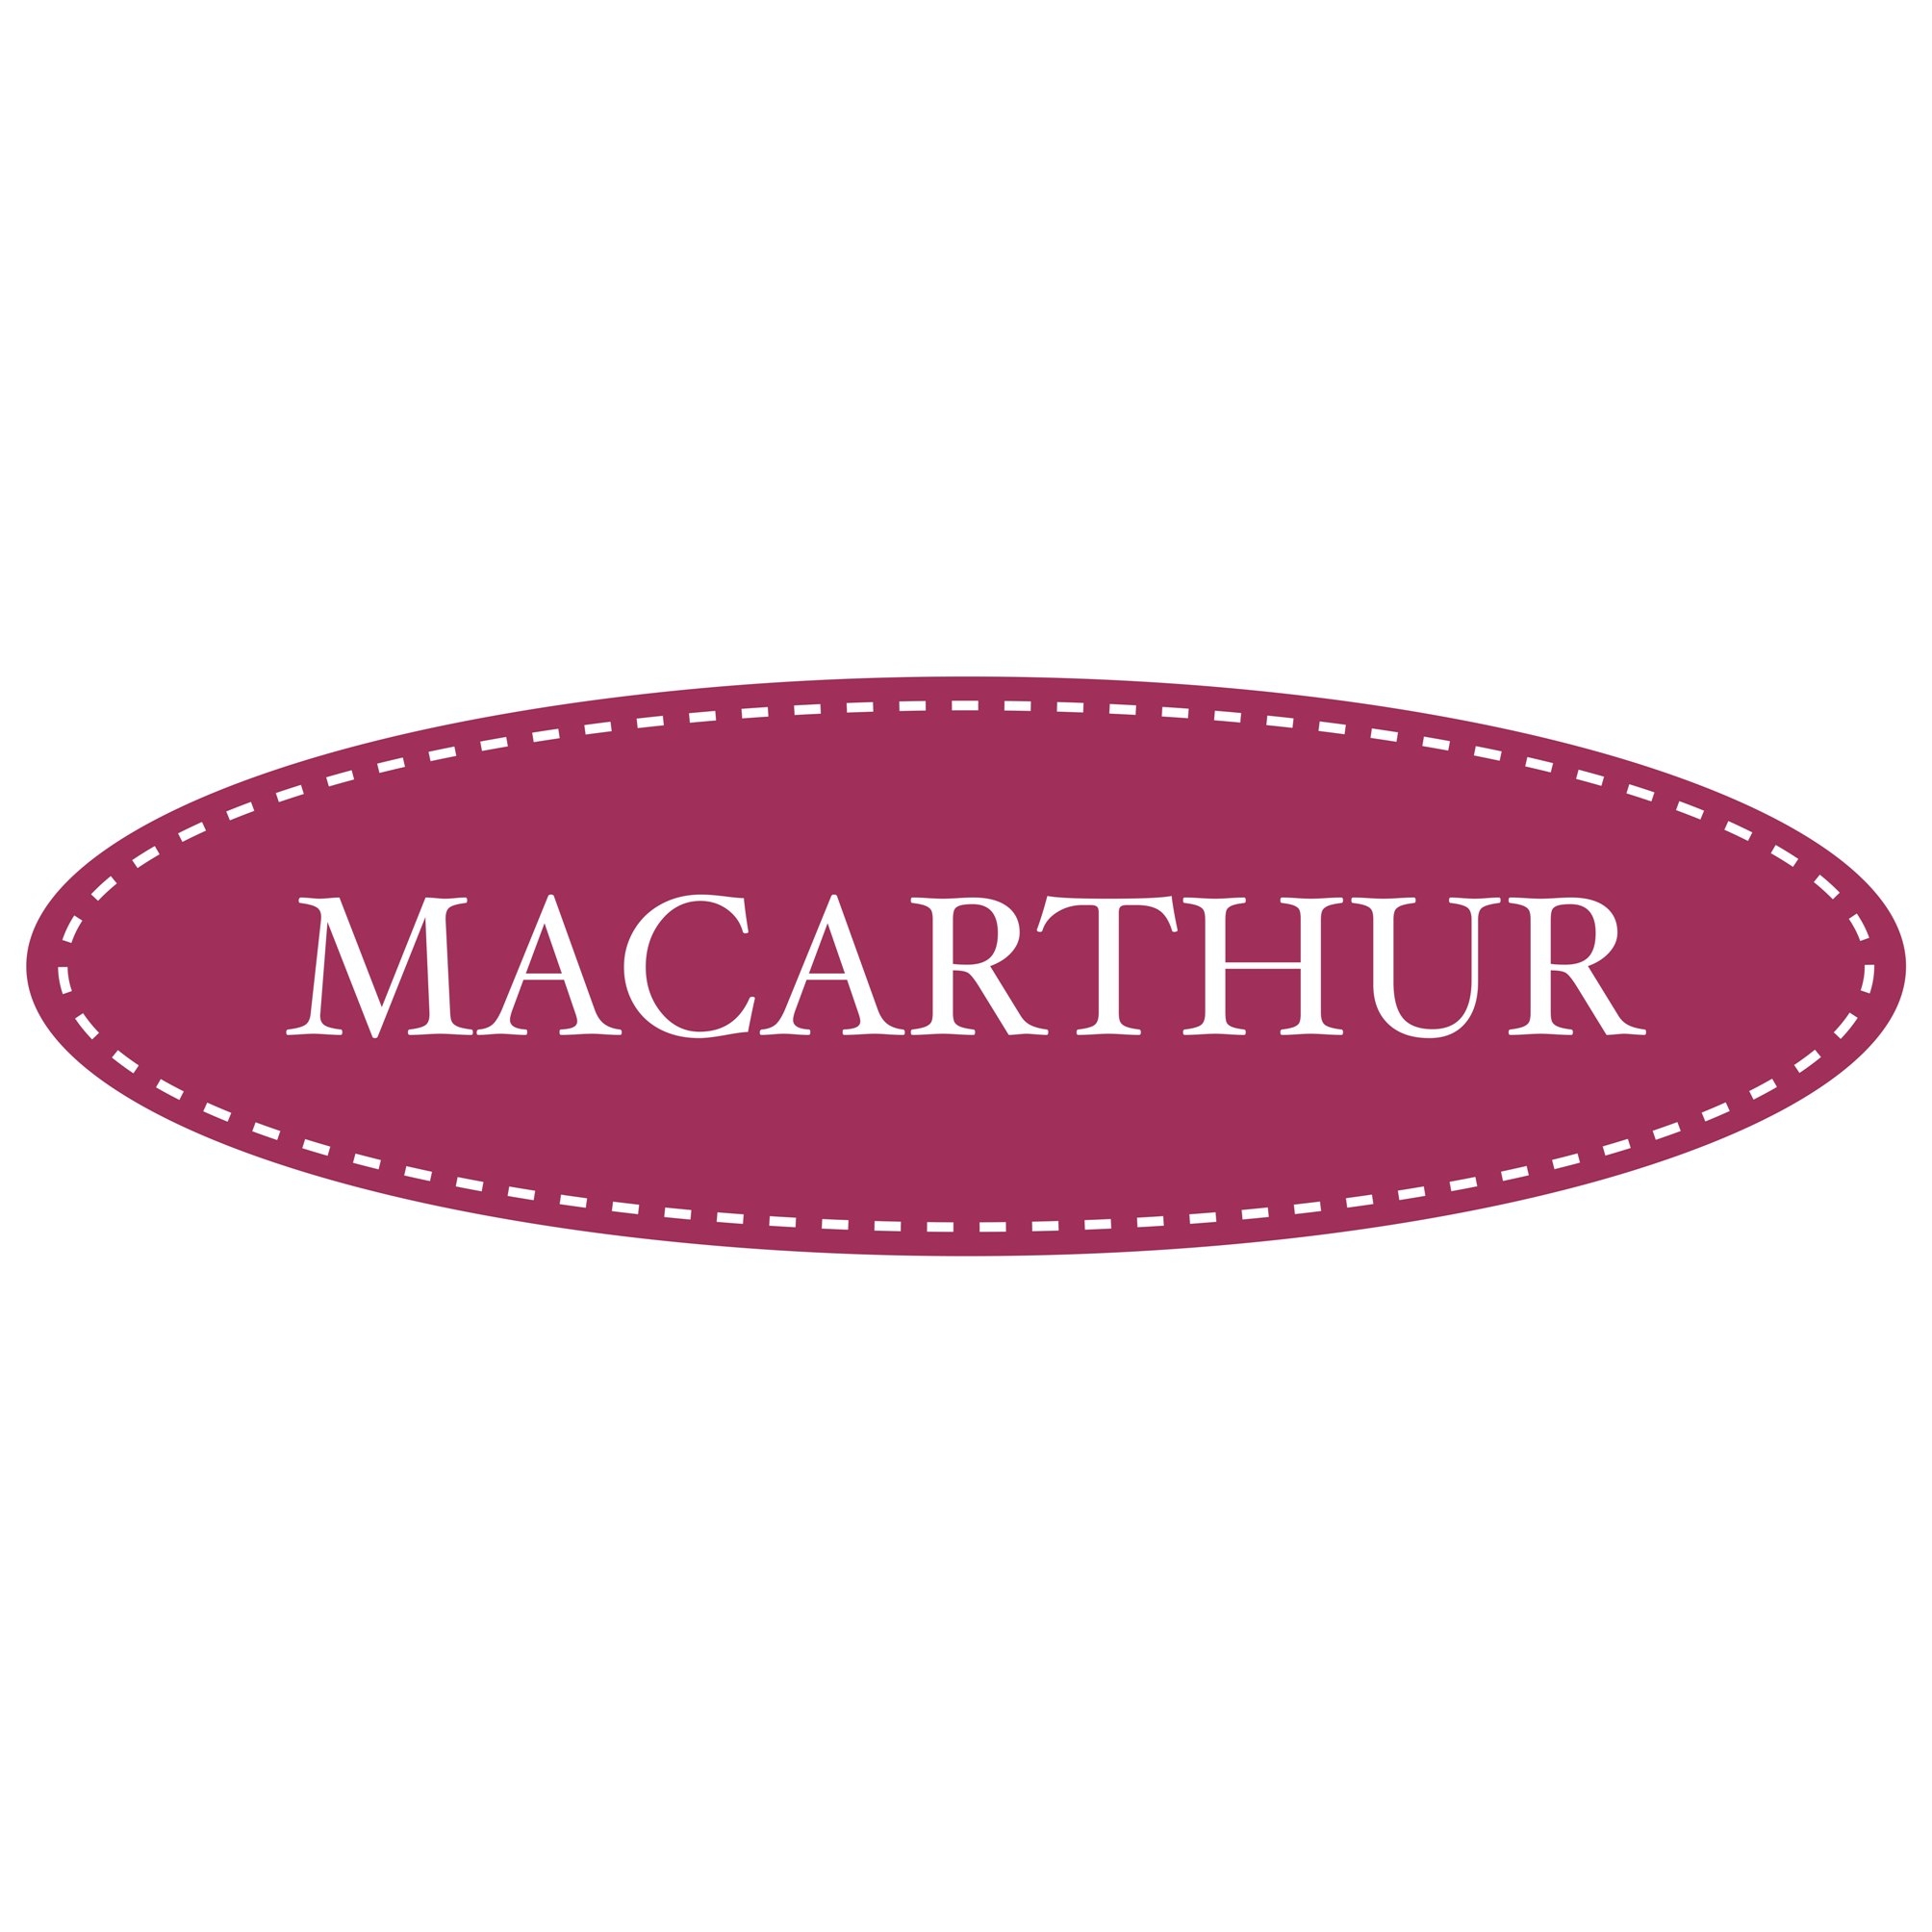 Macarthur Kangaroo Collection